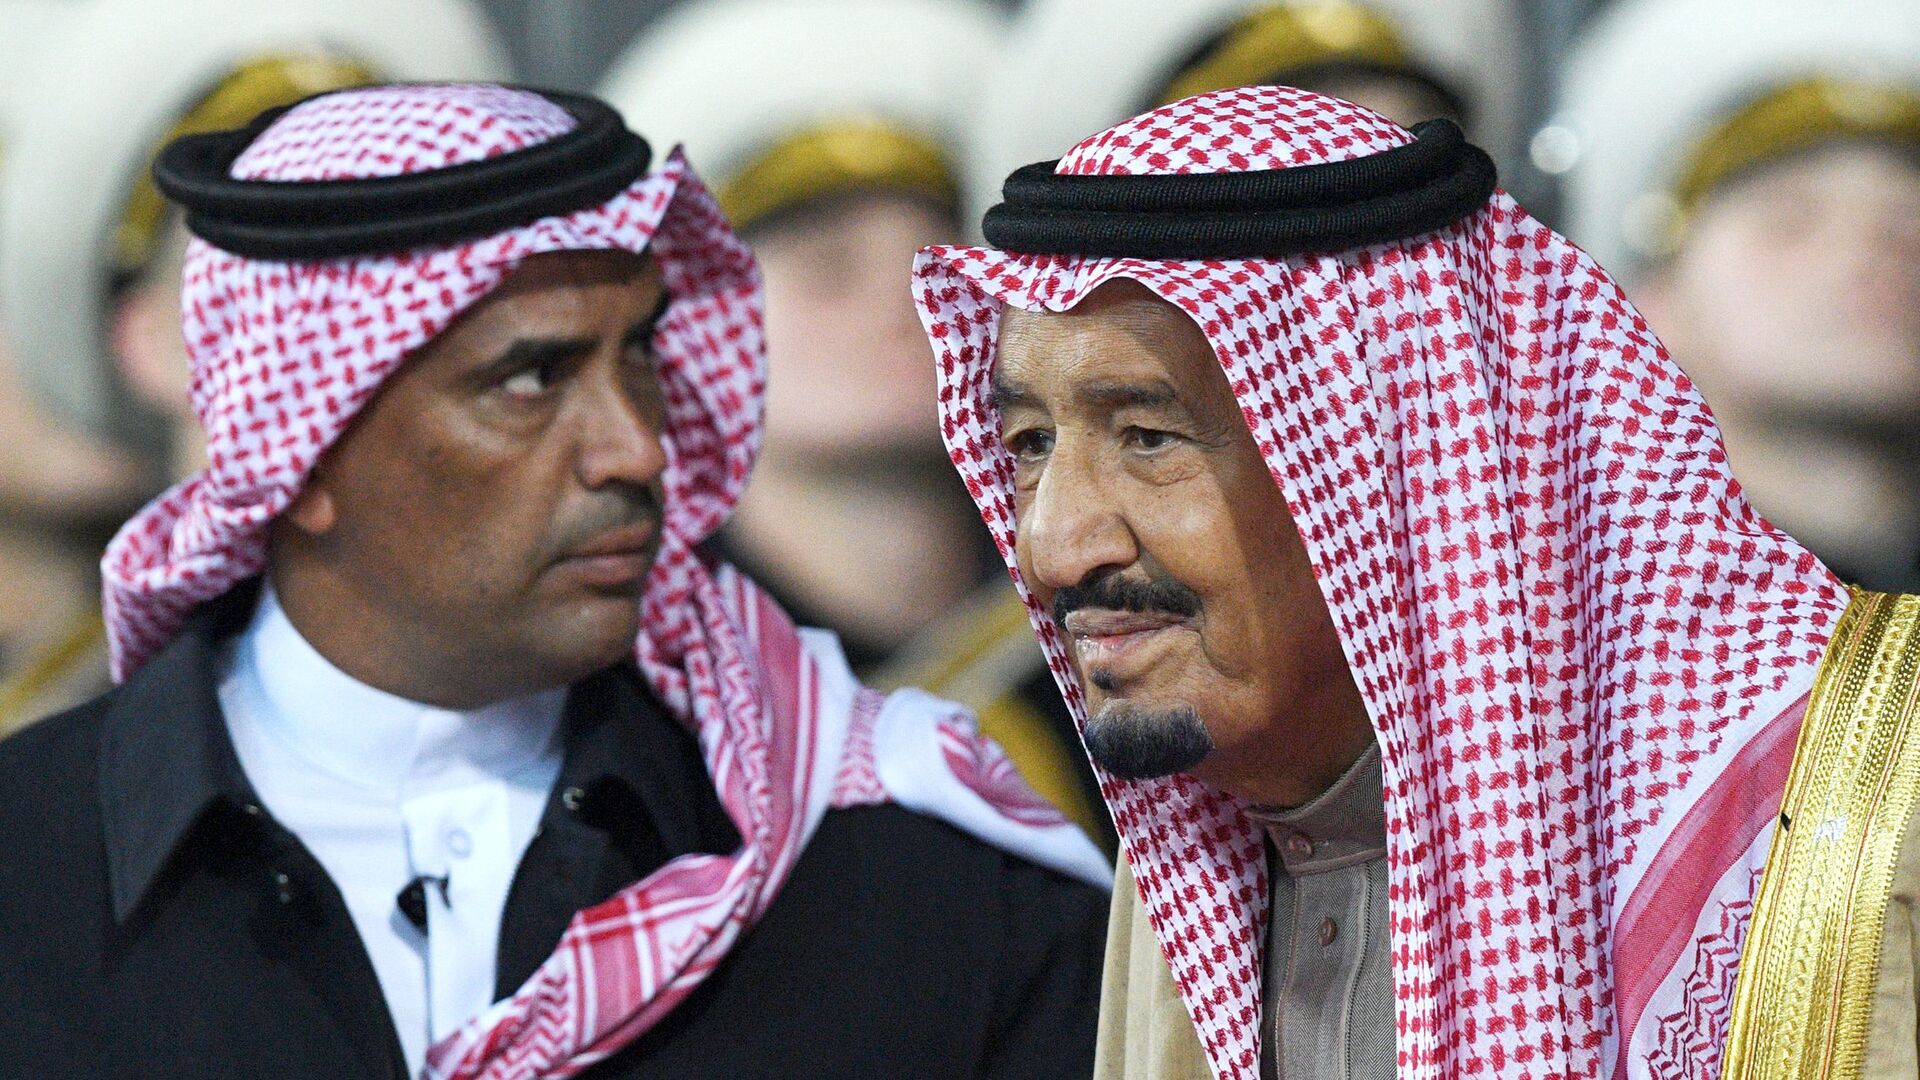 Саудовский принц Мухаммед Бен Салман. Абдель Азиз Бен Сальма. Гарем принца Саудовской Аравии. Гарем принца Саудовской Аравии девушки. Имена саудовской аравии